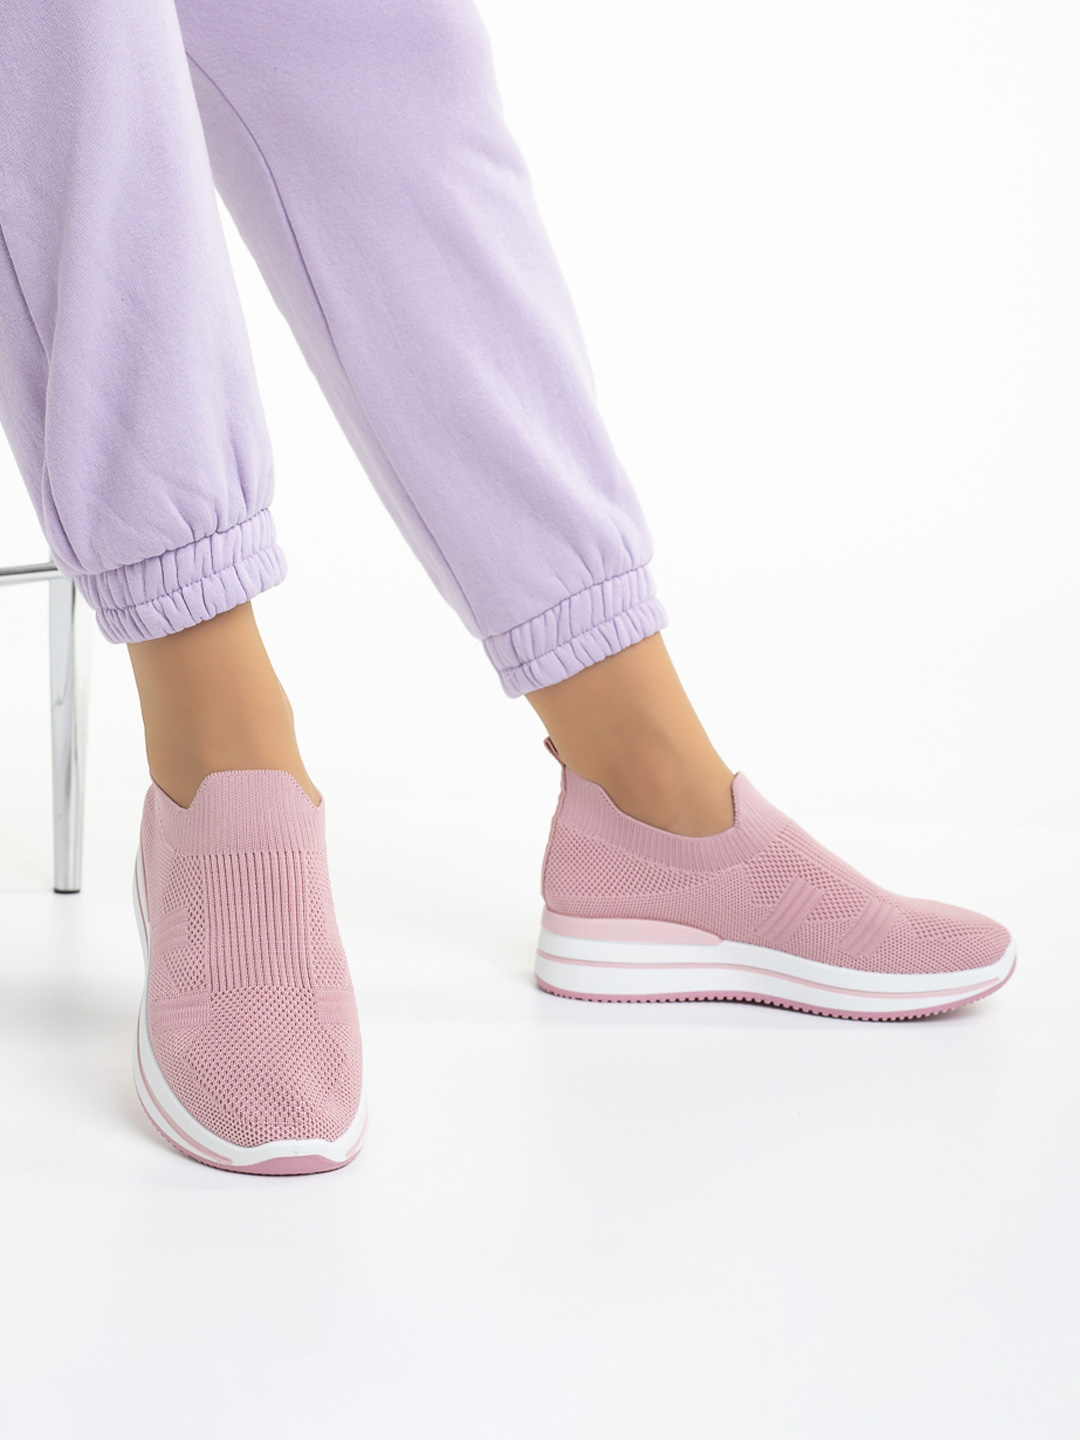 Дамски спортни обувки  розови  от текстилен материал  Moira - Kalapod.bg